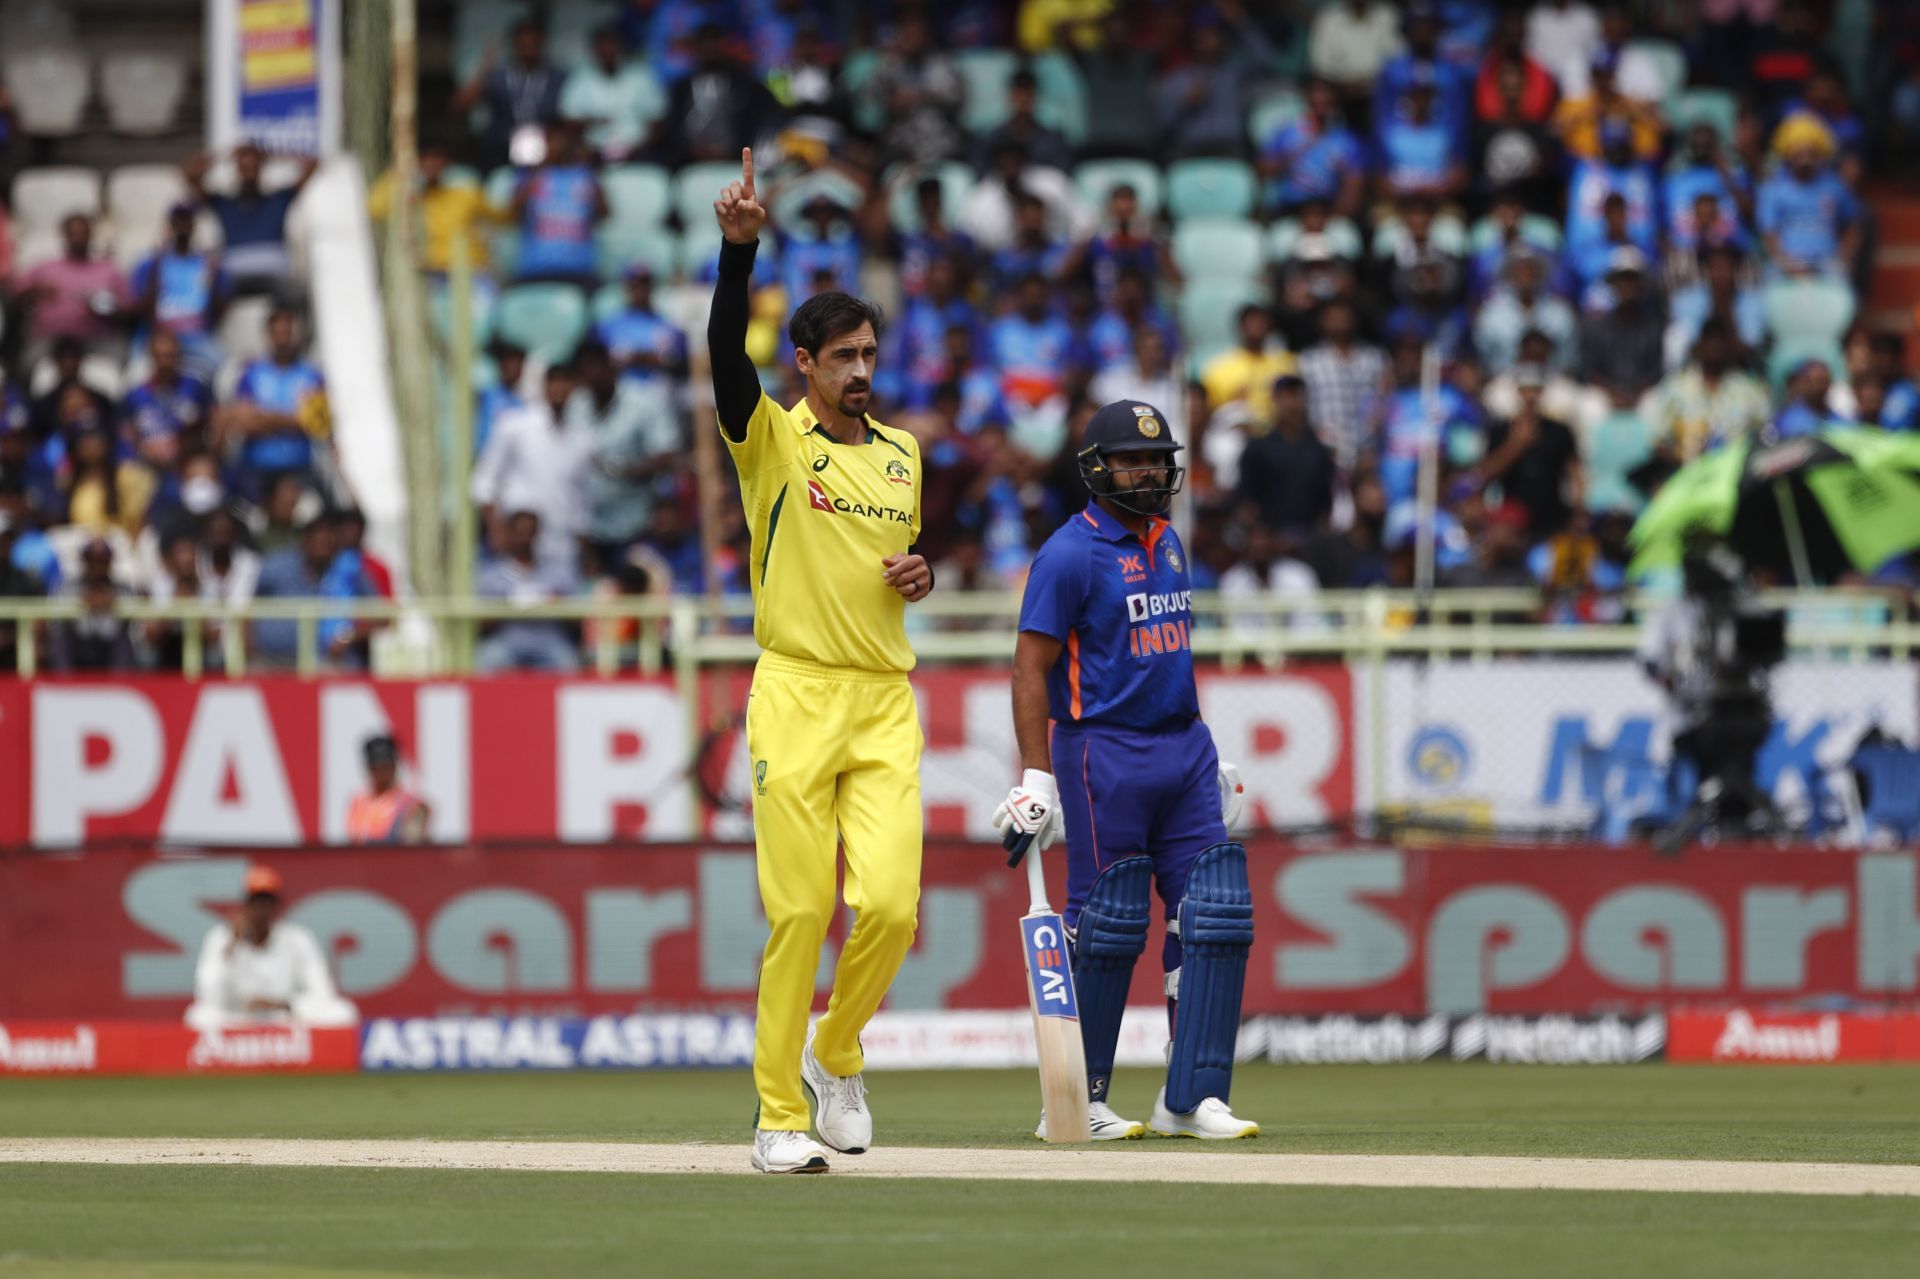 Rohit Sharma struggled to score big on his comeback